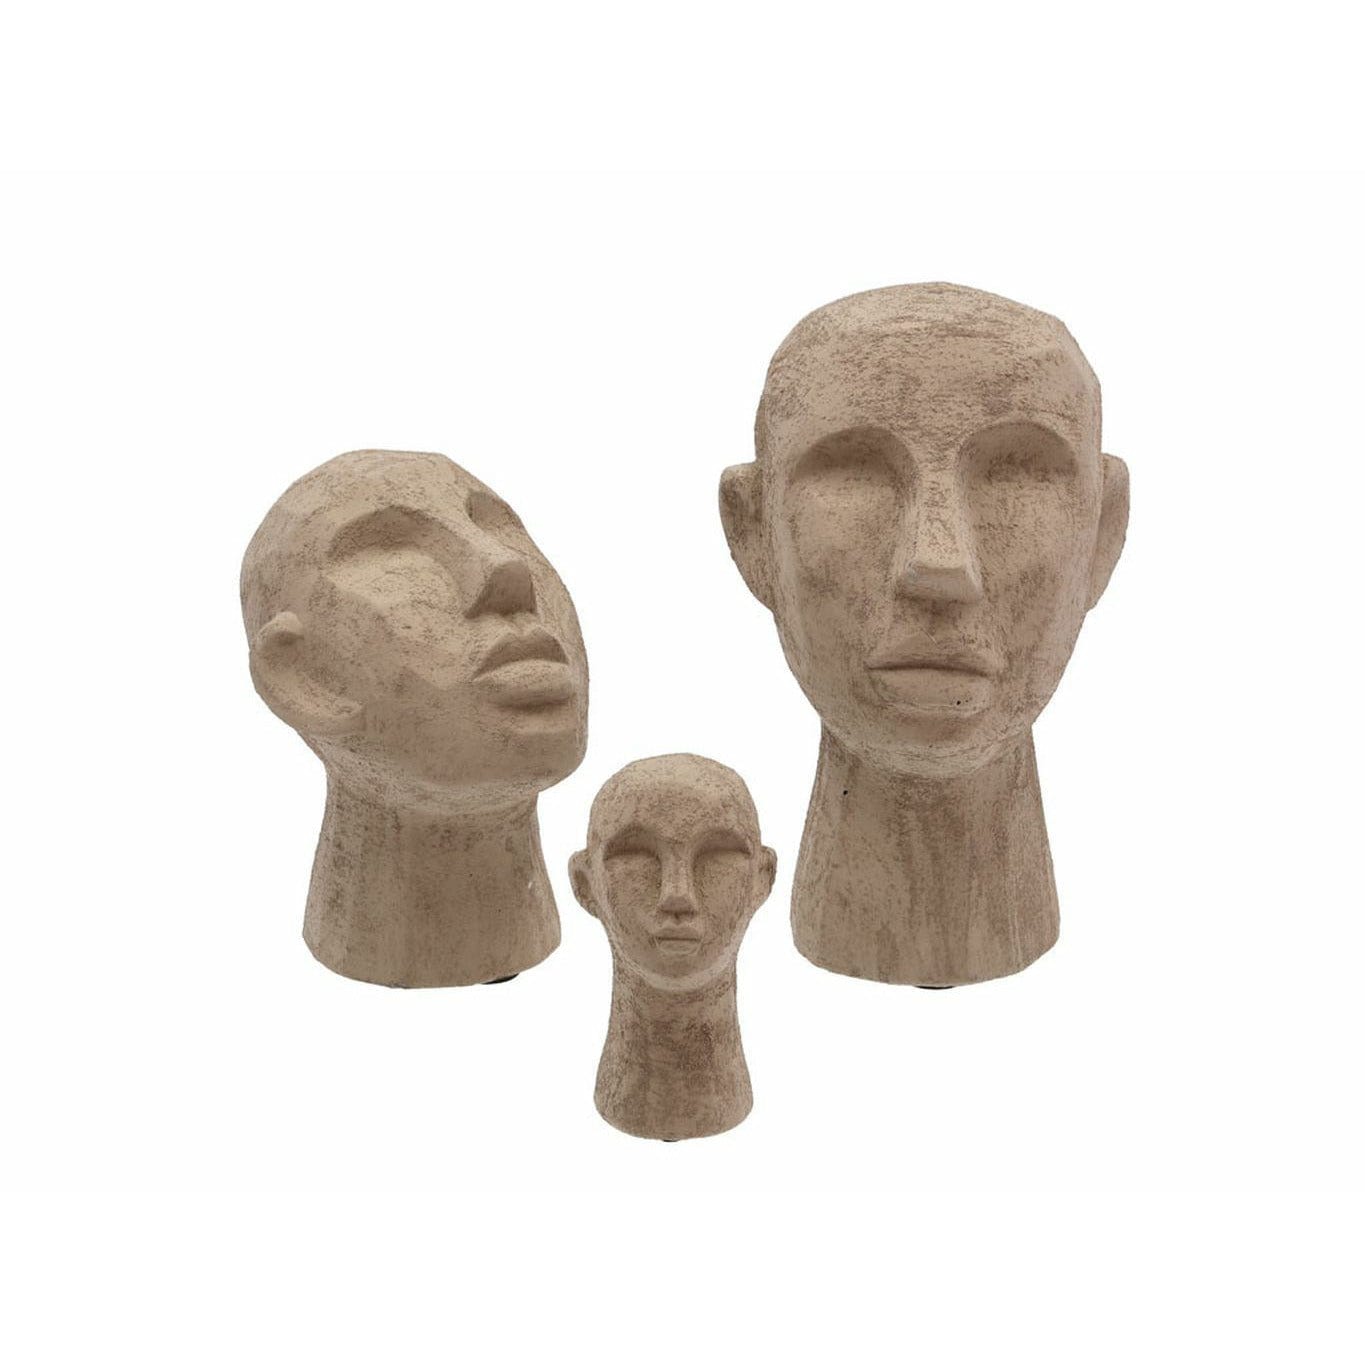 Villa Collection Figure Head 8.5 x 8,5 x 15 cm, gråbrun